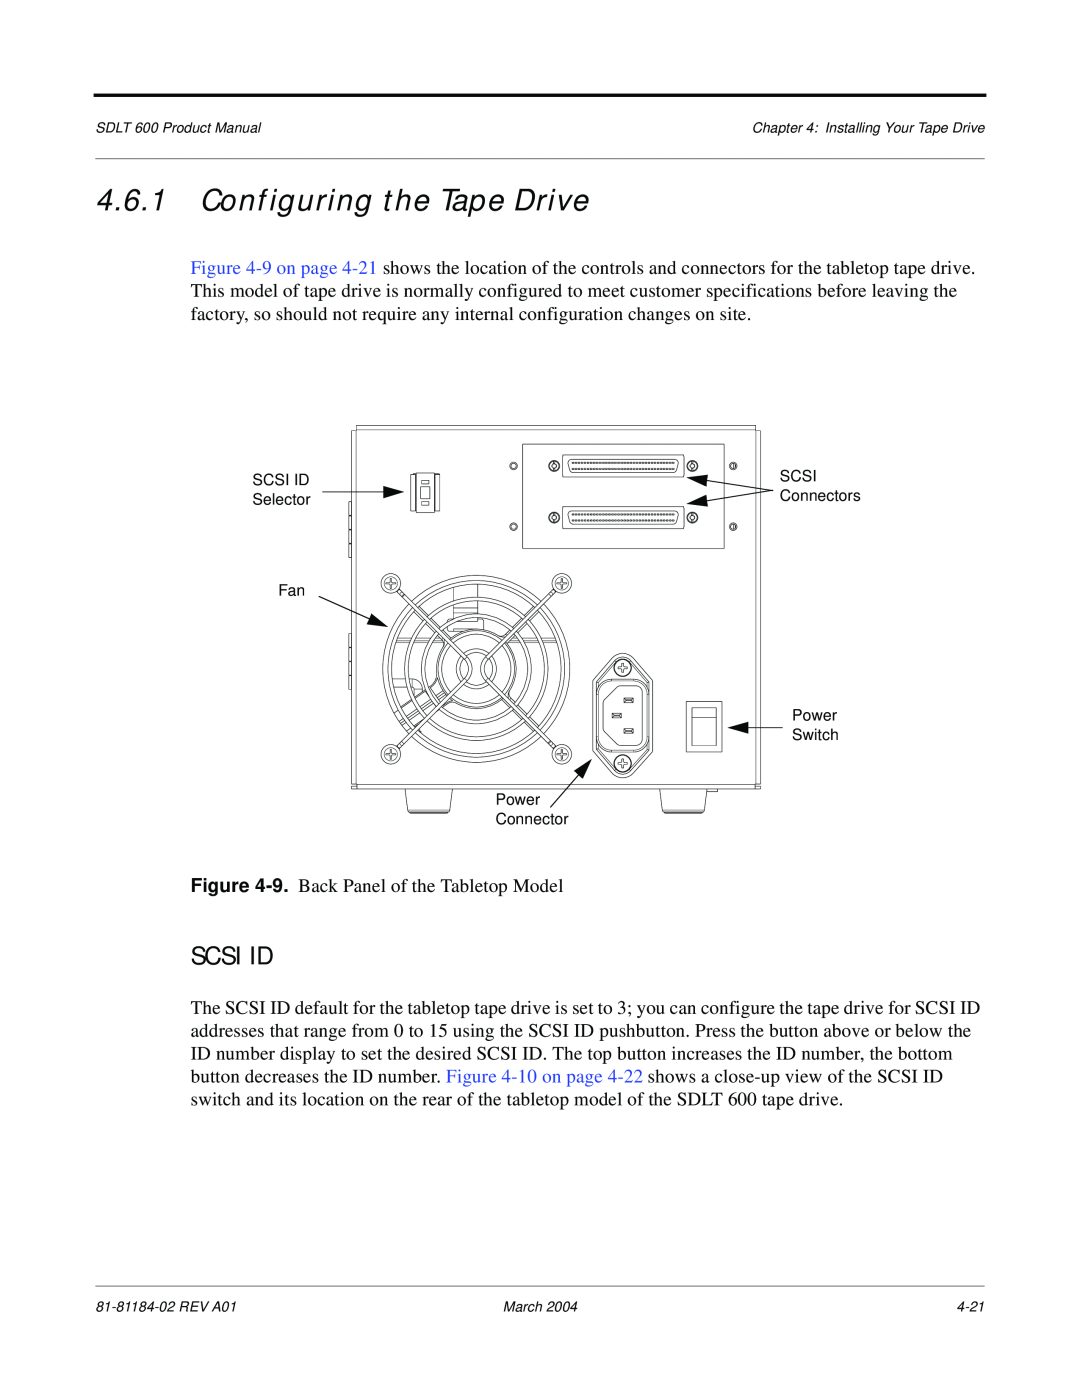 Tandberg Data 600 manual Configuring the Tape Drive, Scsi Id 